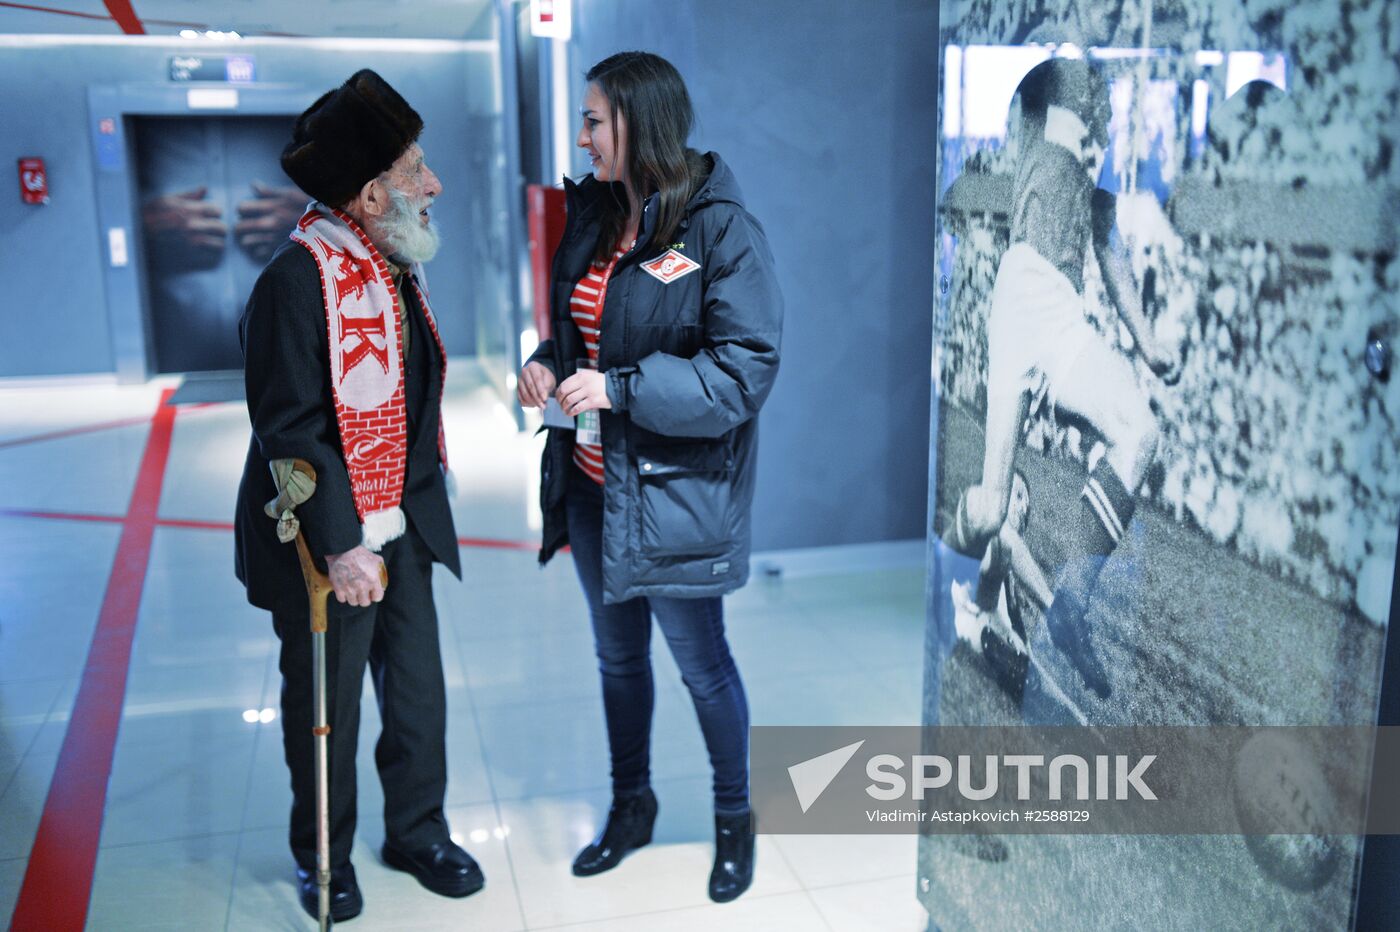 FC Spartak oldest fan visits the club's stadium